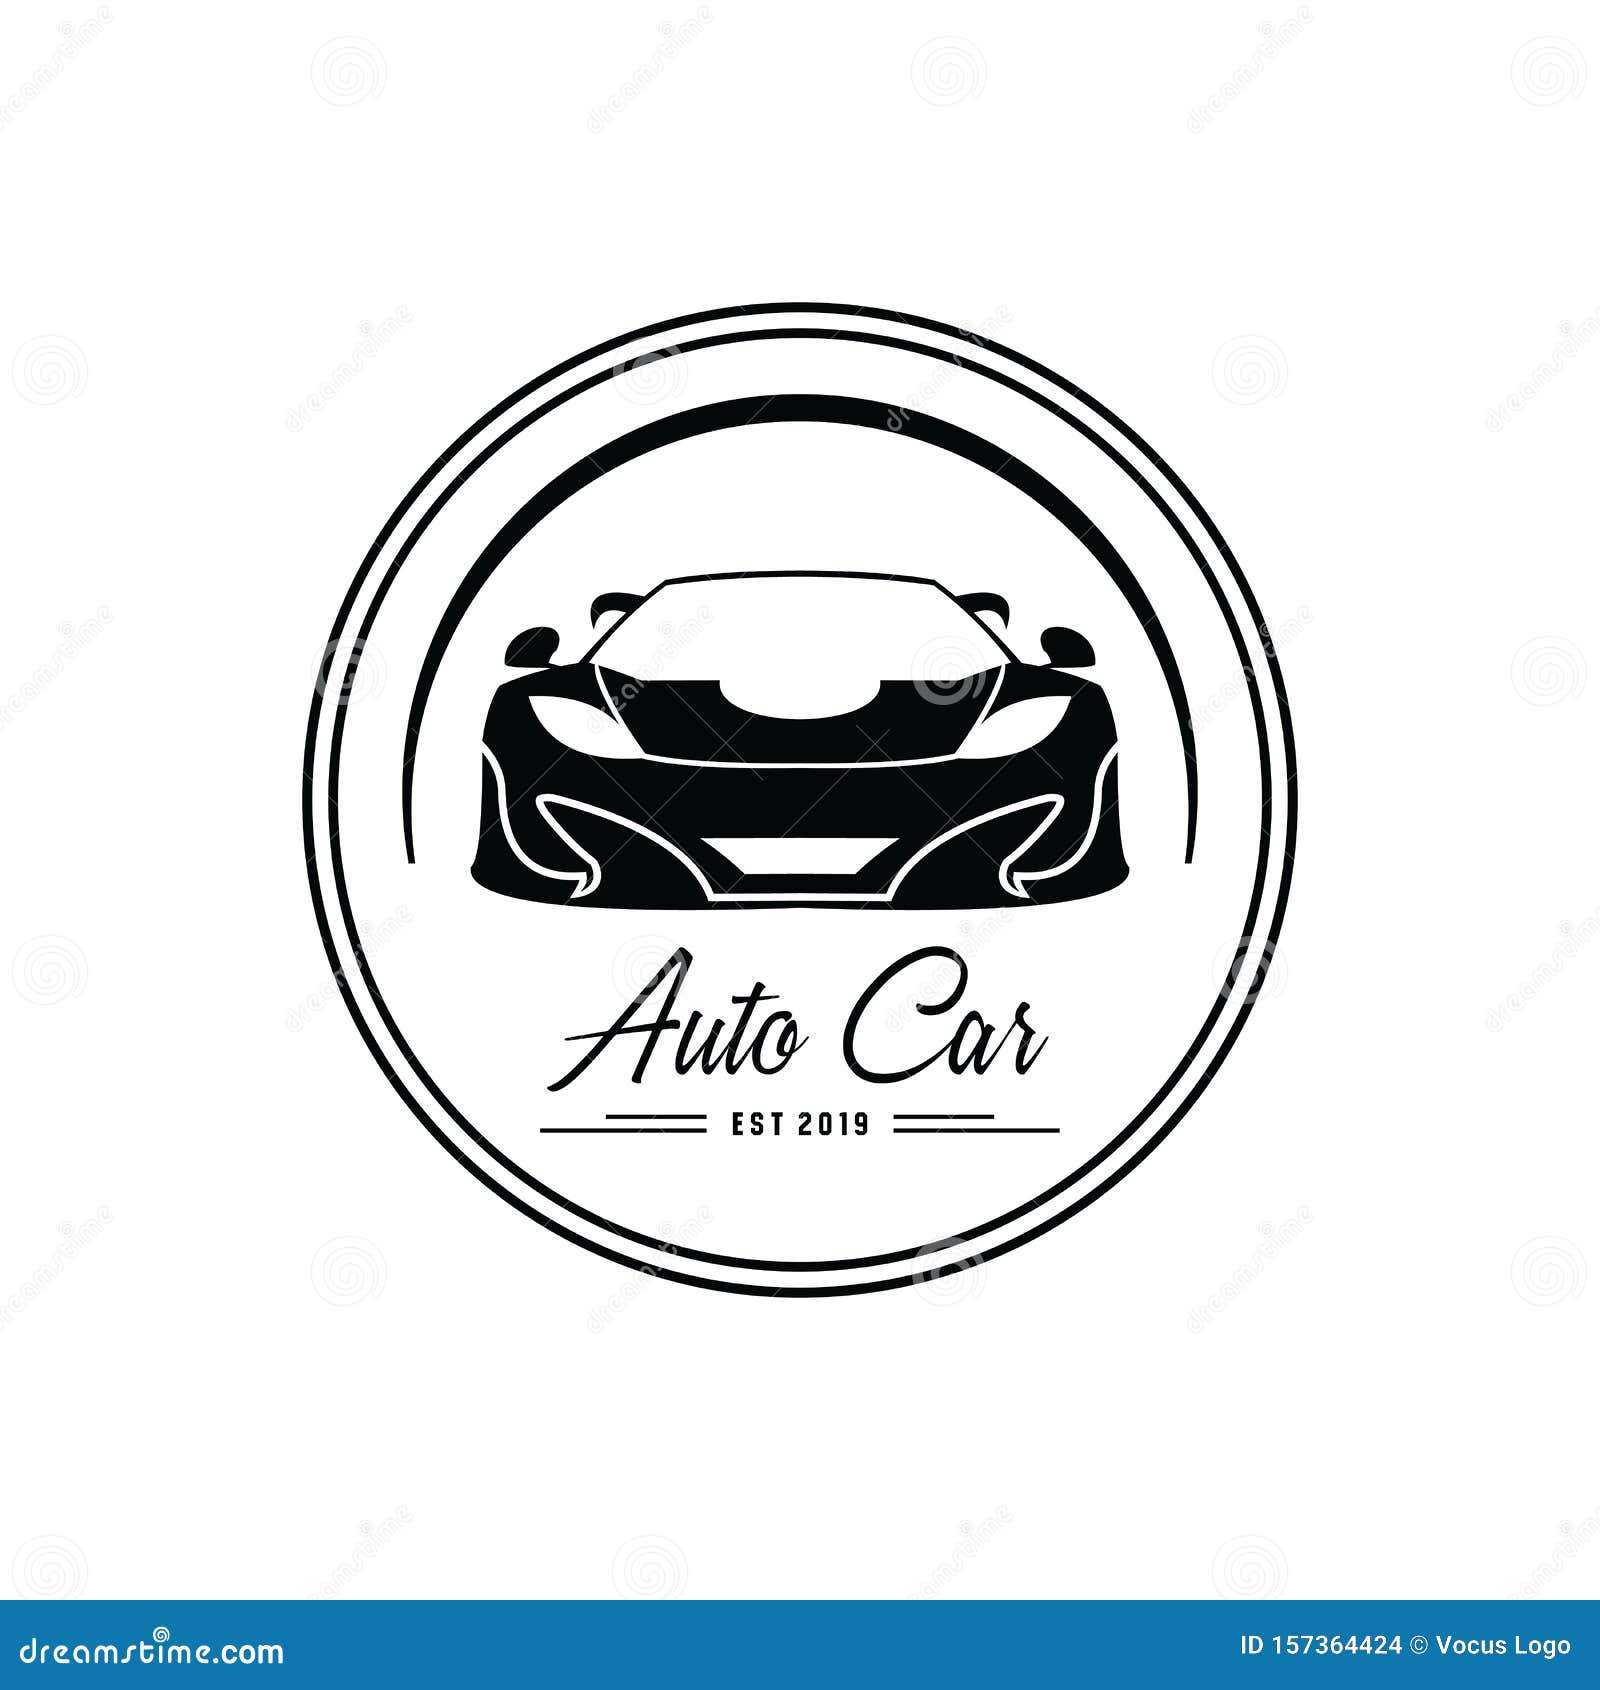 Auto Car Logo Design, Icon, Vector, Illustration Stock Vector ...